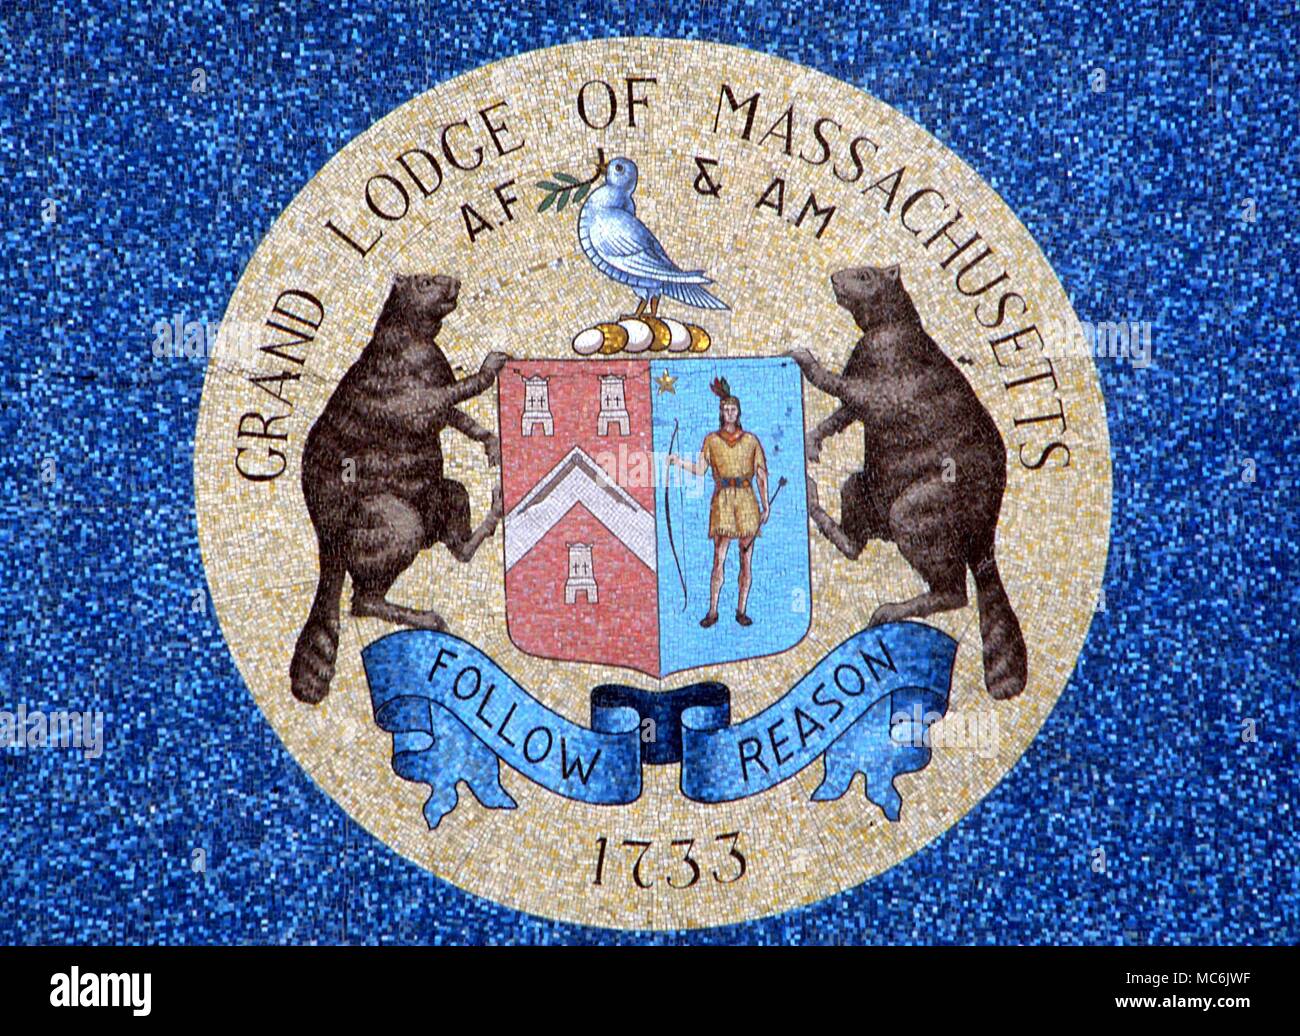 https://c8.alamy.com/comp/MC6JWF/masonic-seal-masonic-seal-of-the-grand-lodge-of-massachusetts-in-a-wall-mosaic-on-the-facade-of-the-masonic-temple-of-the-grand-lodge-of-massachusetts-in-boston-massachusetts-MC6JWF.jpg